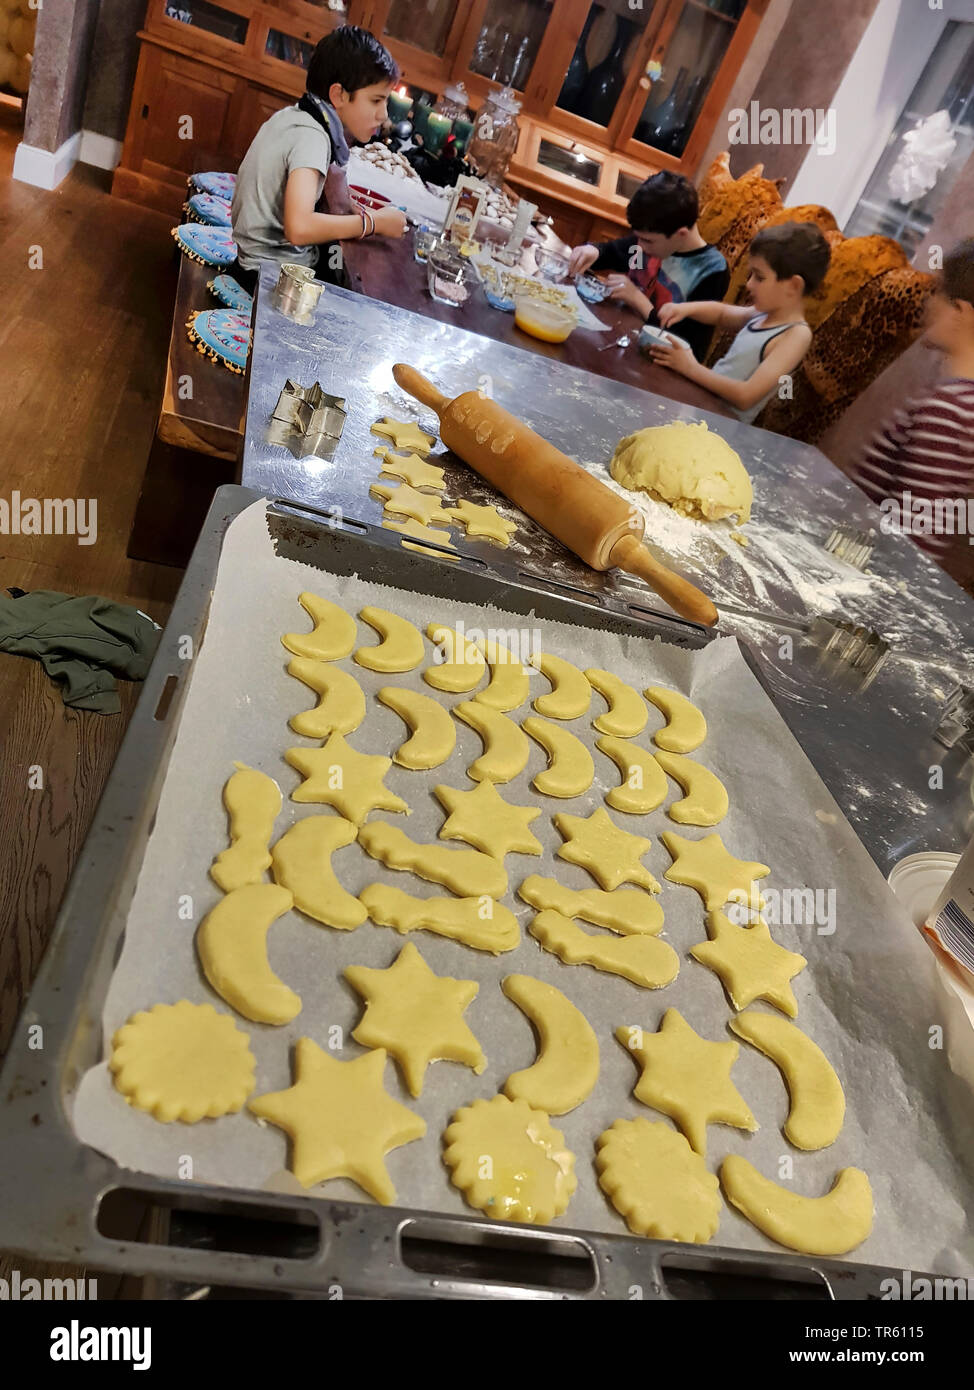 Ragazzi piccoli i biscotti di cottura di una cucina, Germania Foto Stock